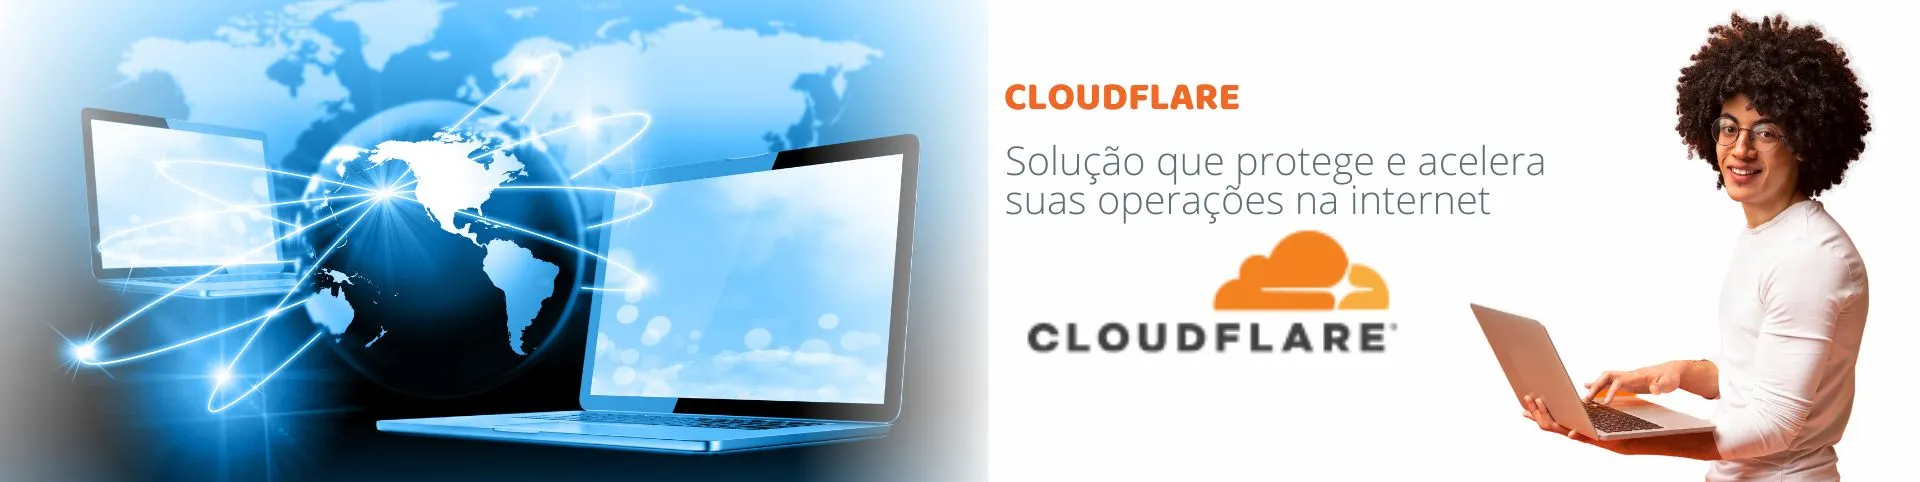 NetSol_Cloudflare